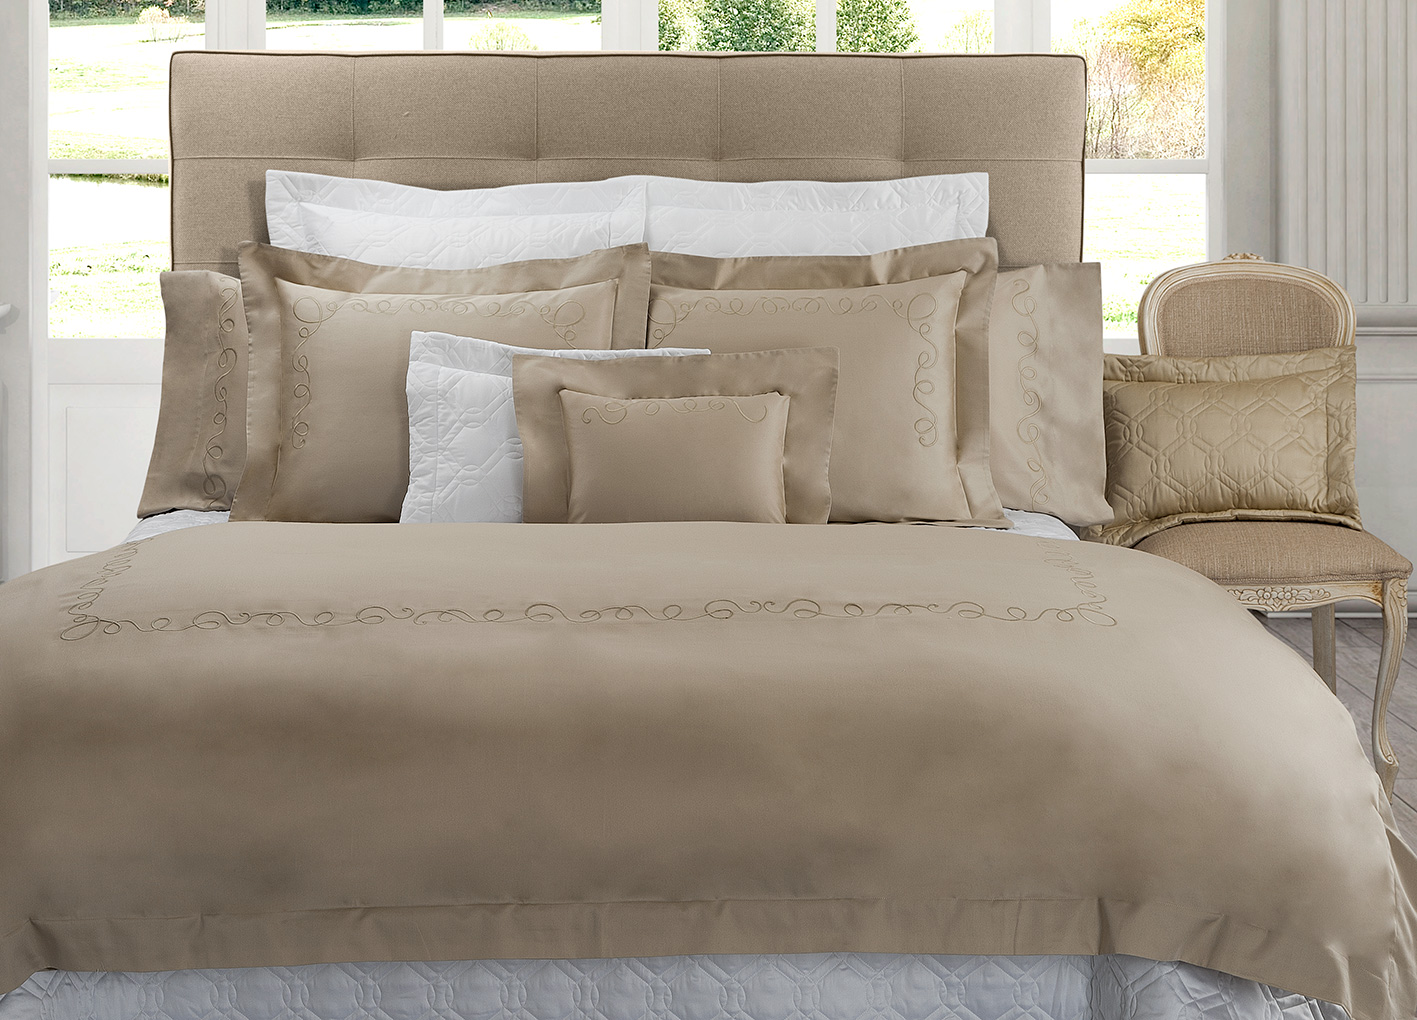 Vera Italian Linensvera Italian Linens Duvet Covers Pillow